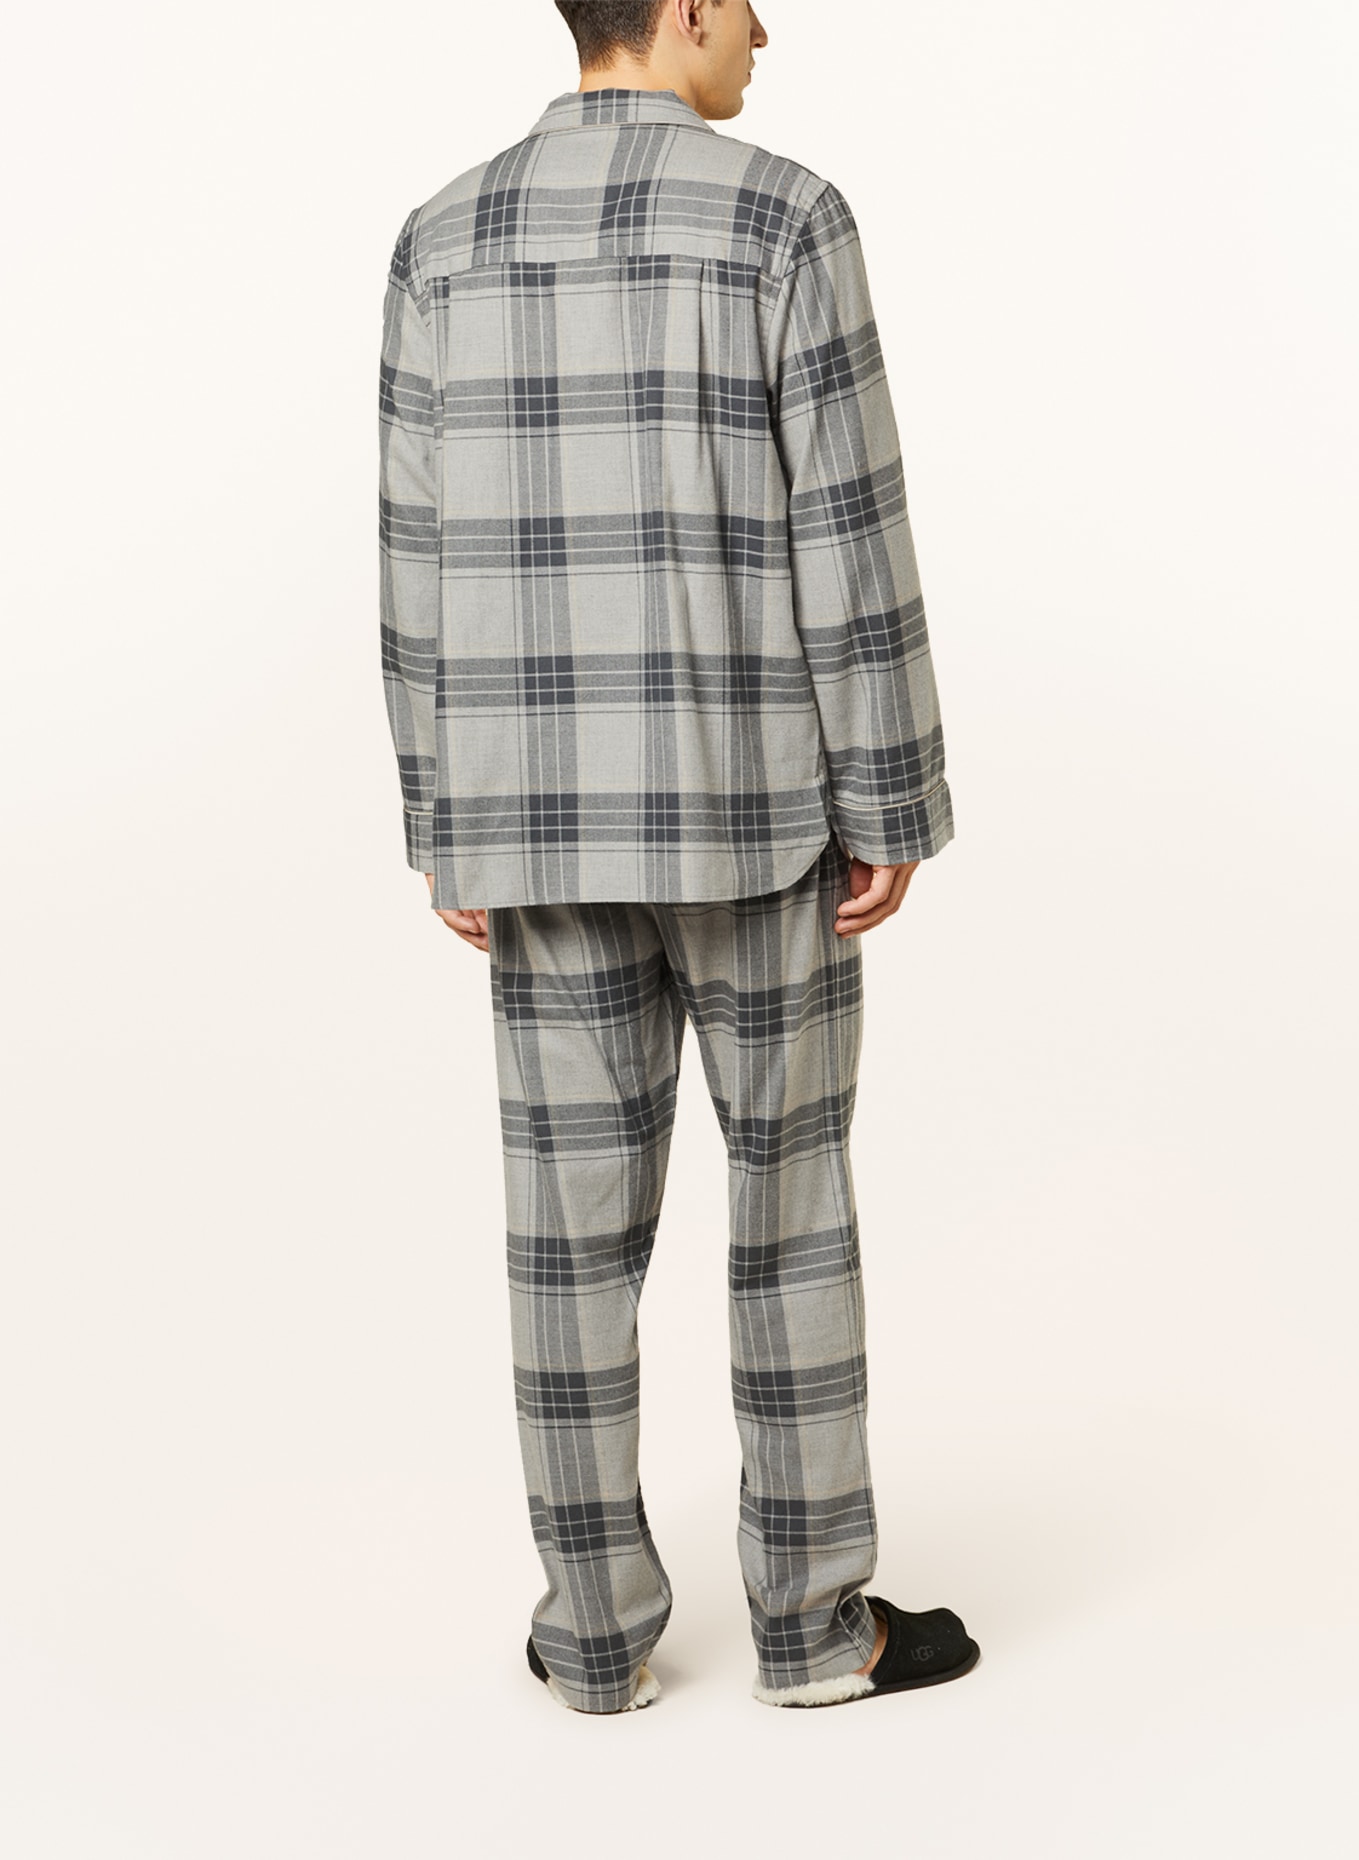 zimmerli Pajamas COZY FLANNEL in flannel, Color: DARK GRAY/ GRAY/ LIGHT GRAY (Image 3)